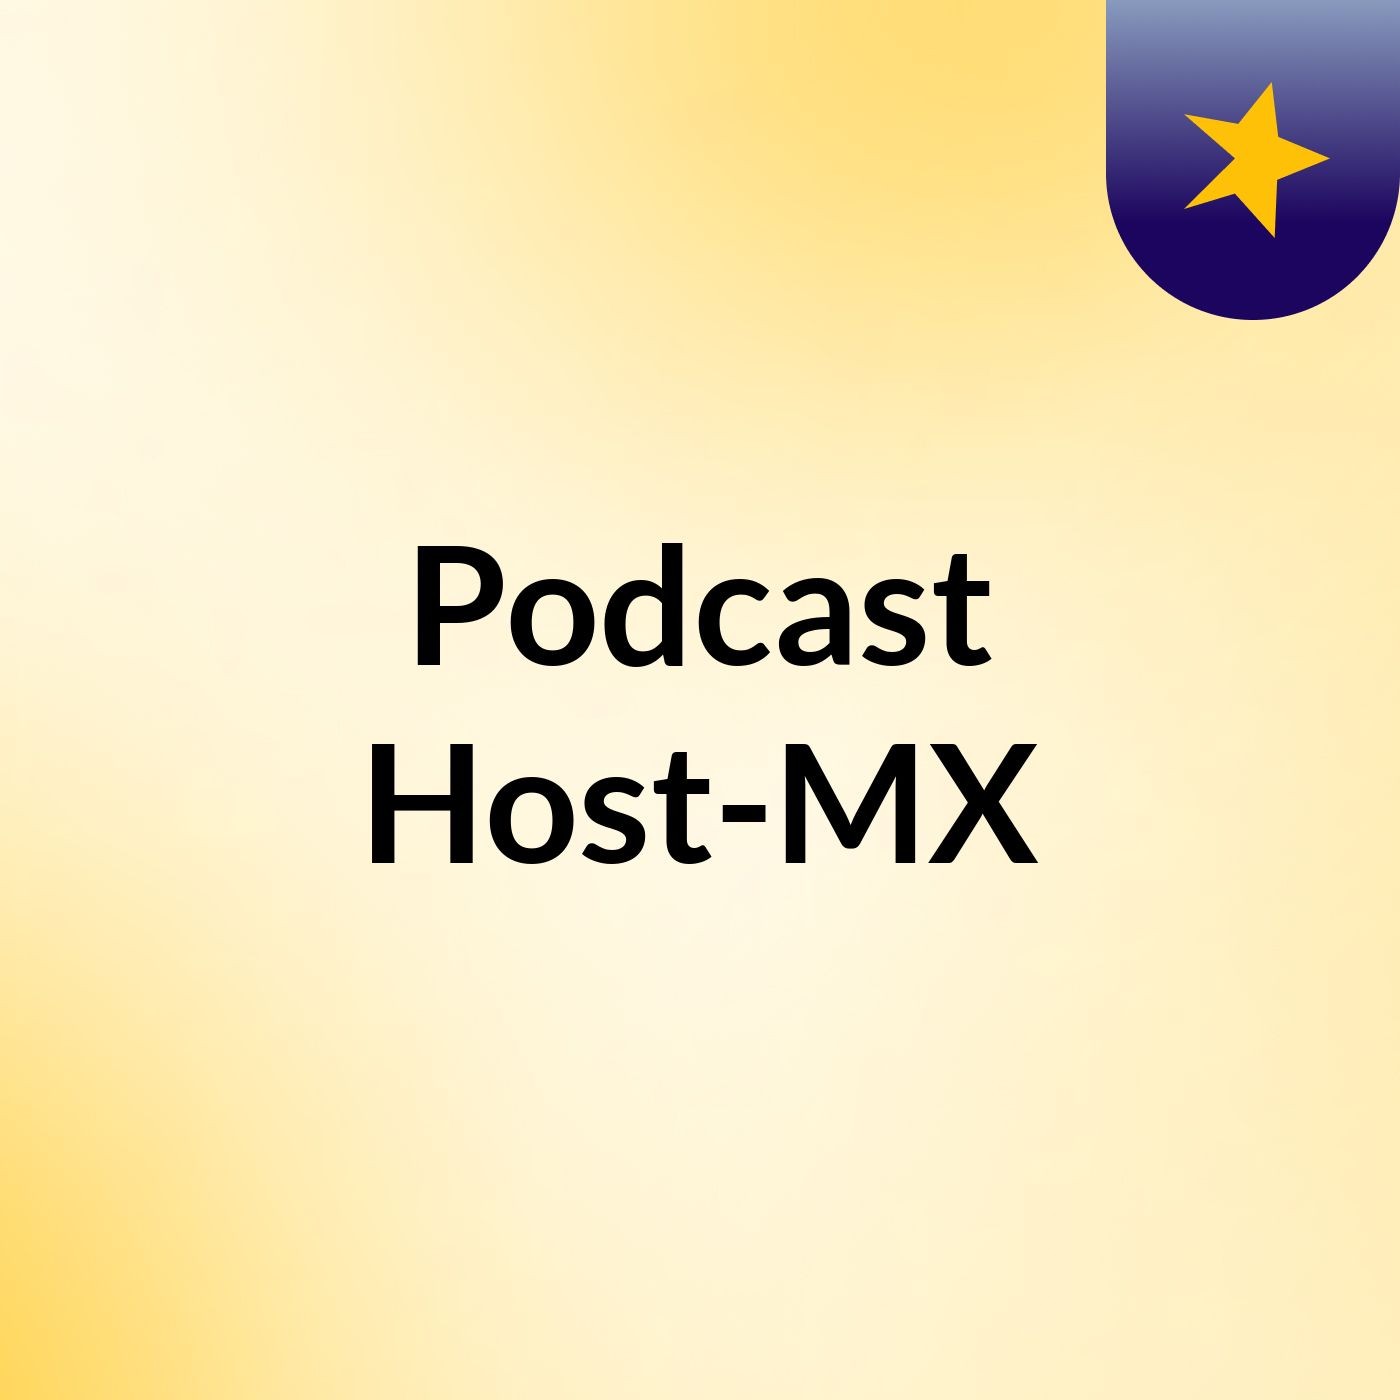 Podcast Host-MX